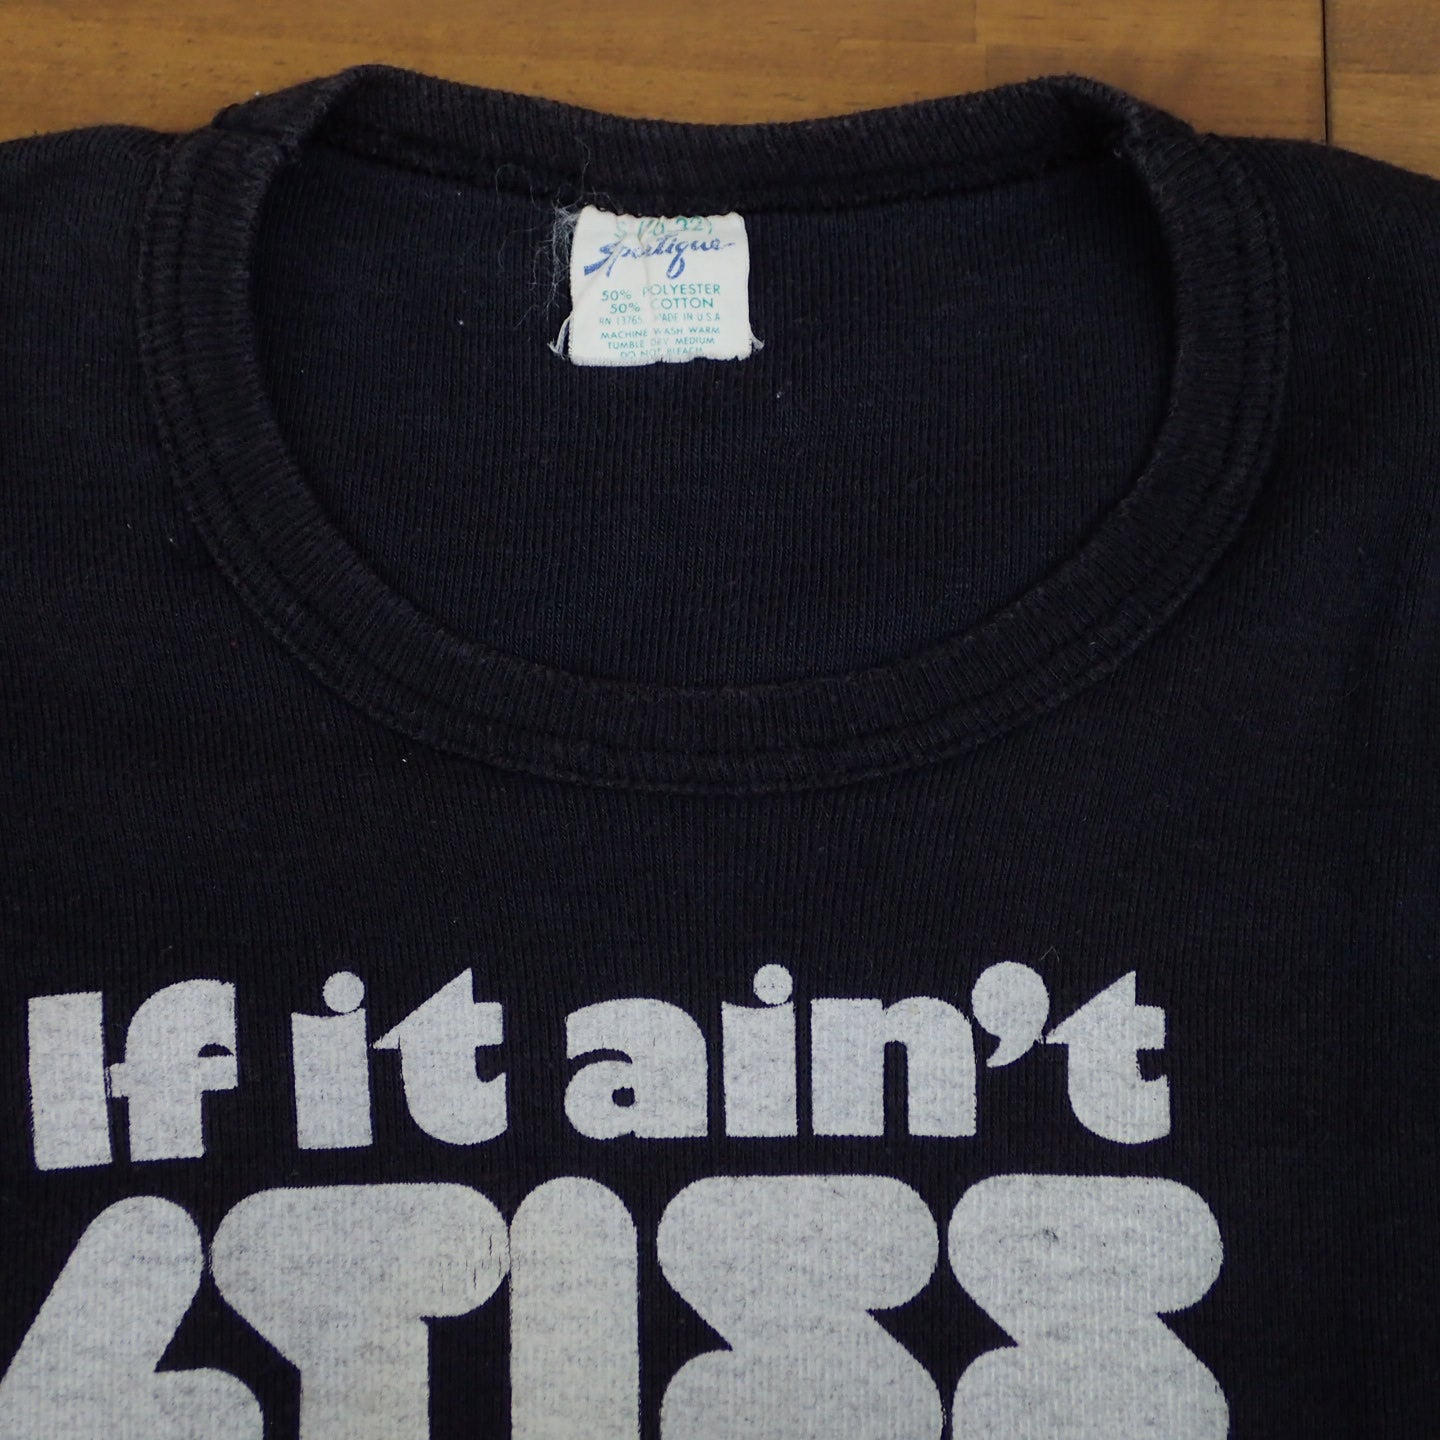 70s Stiff Records T-shirt "Stiff Slogan Tee"